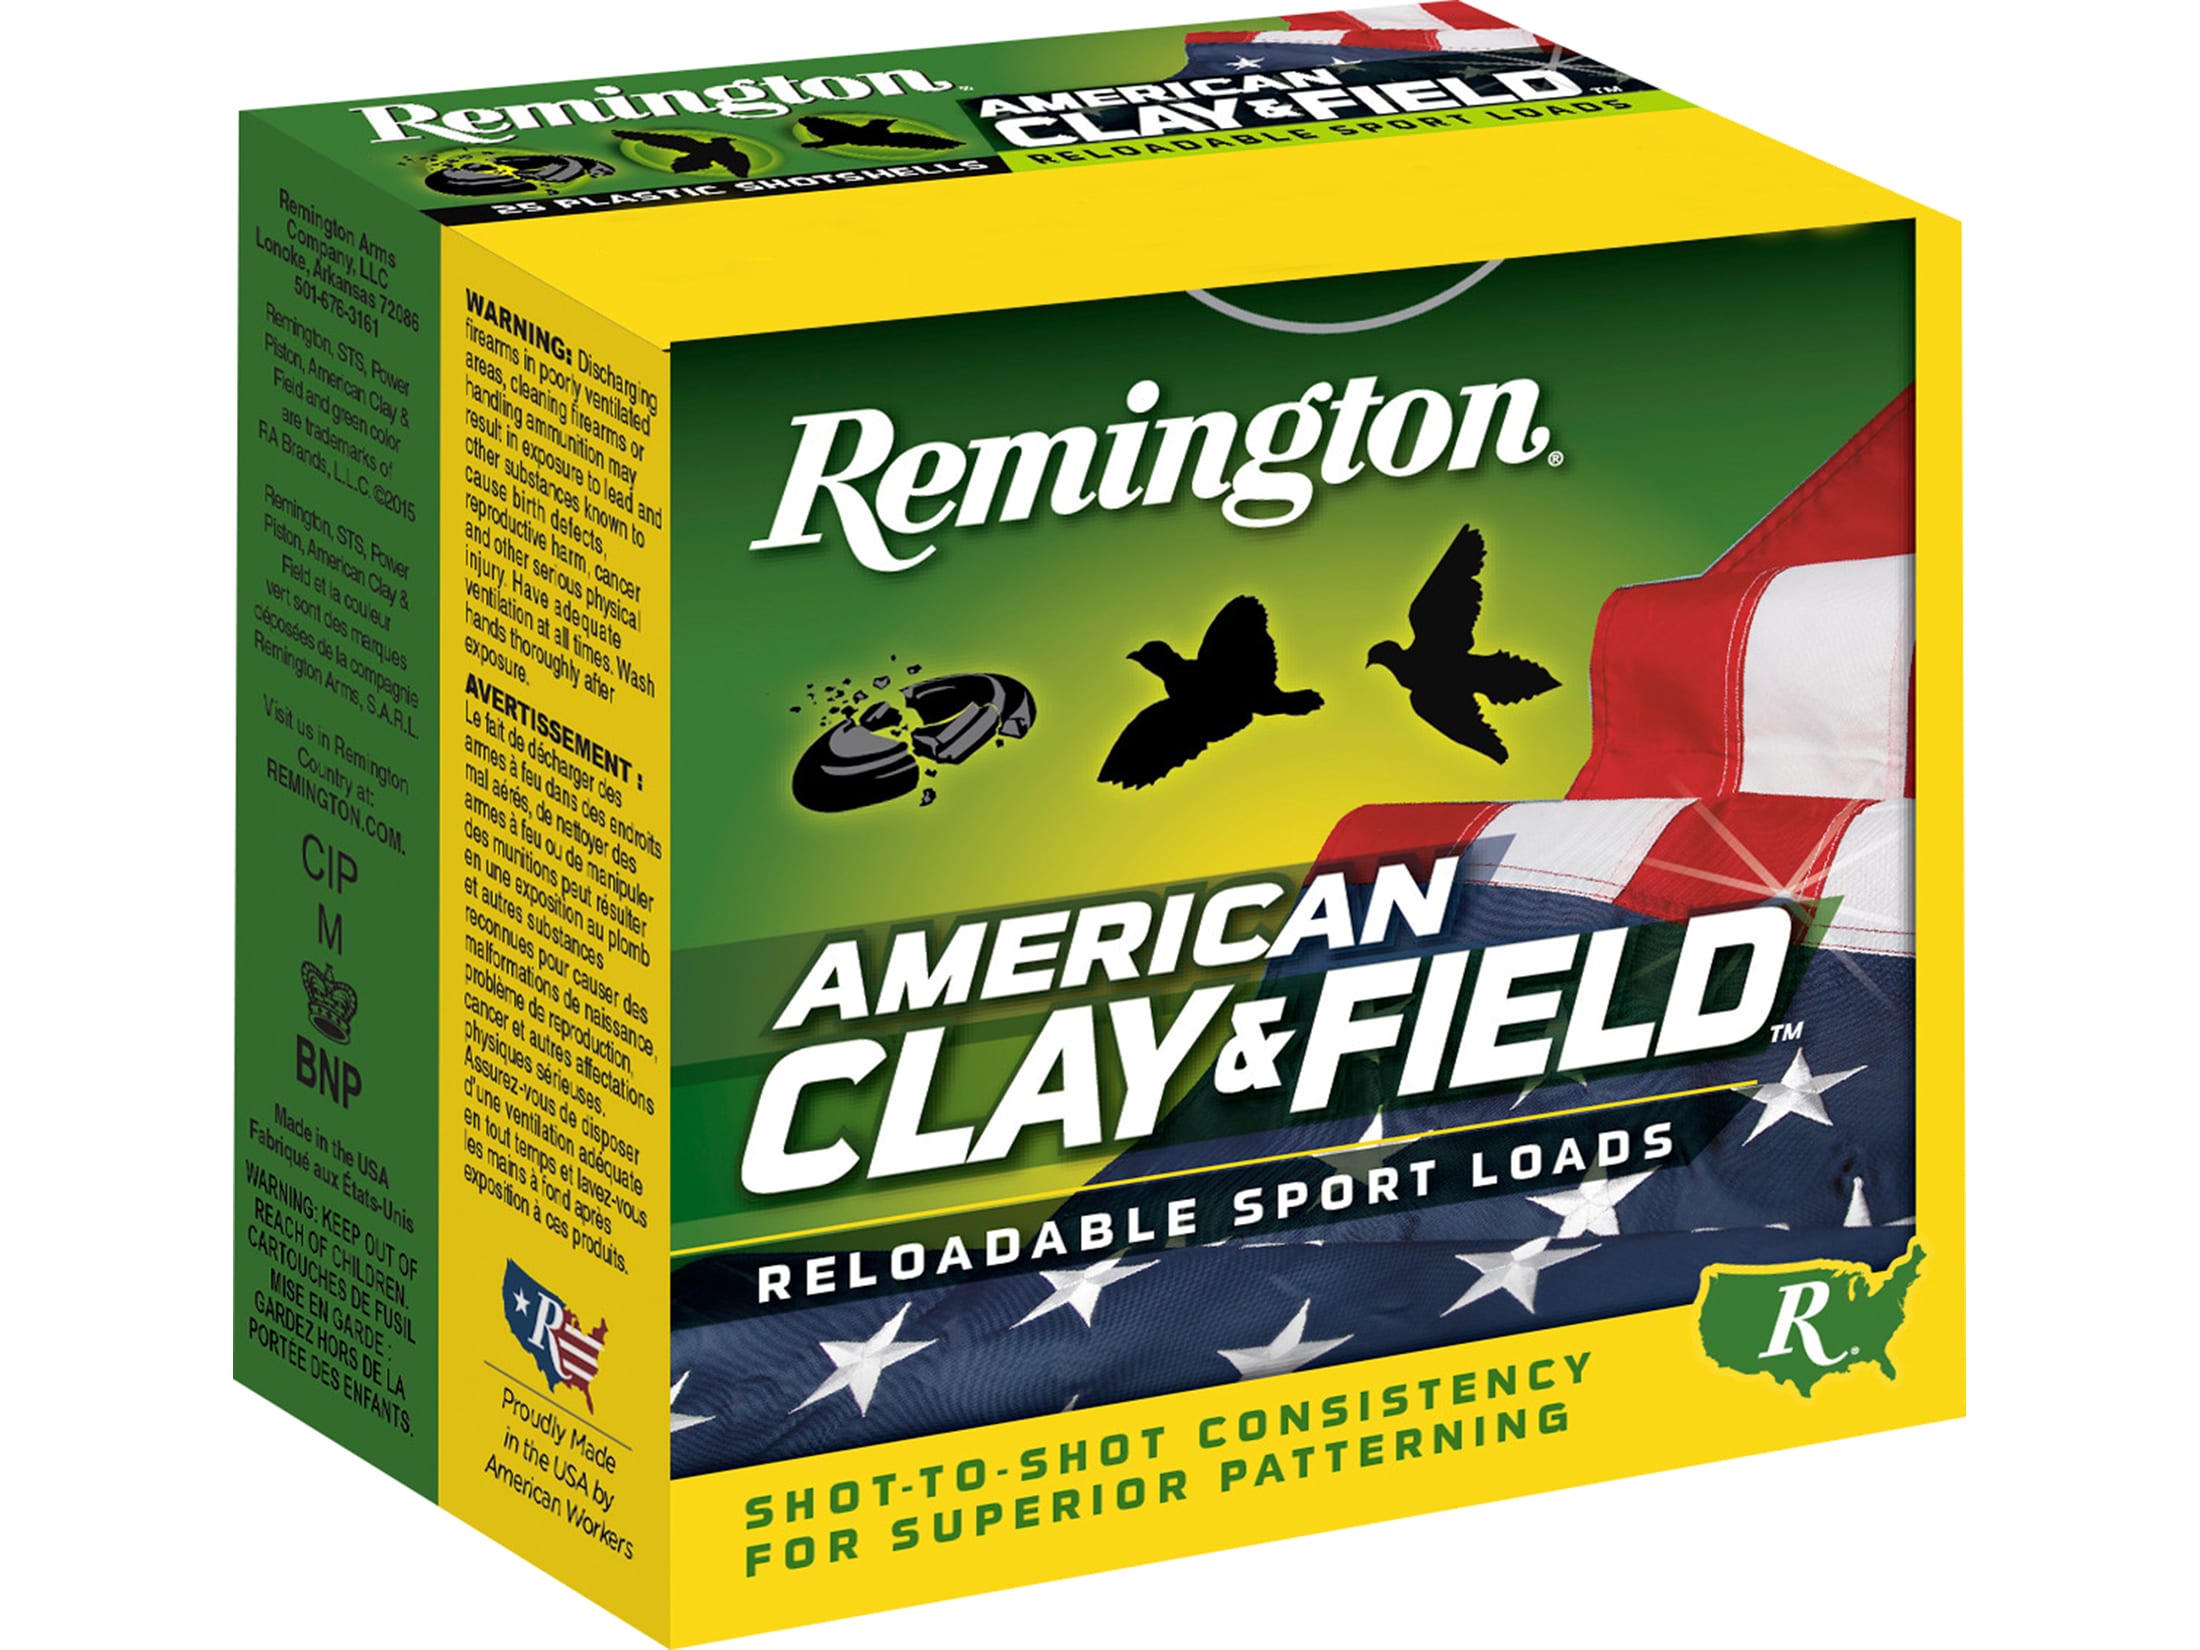 Remington American Clay & Field Ammunition 20 Gauge 2-3/4